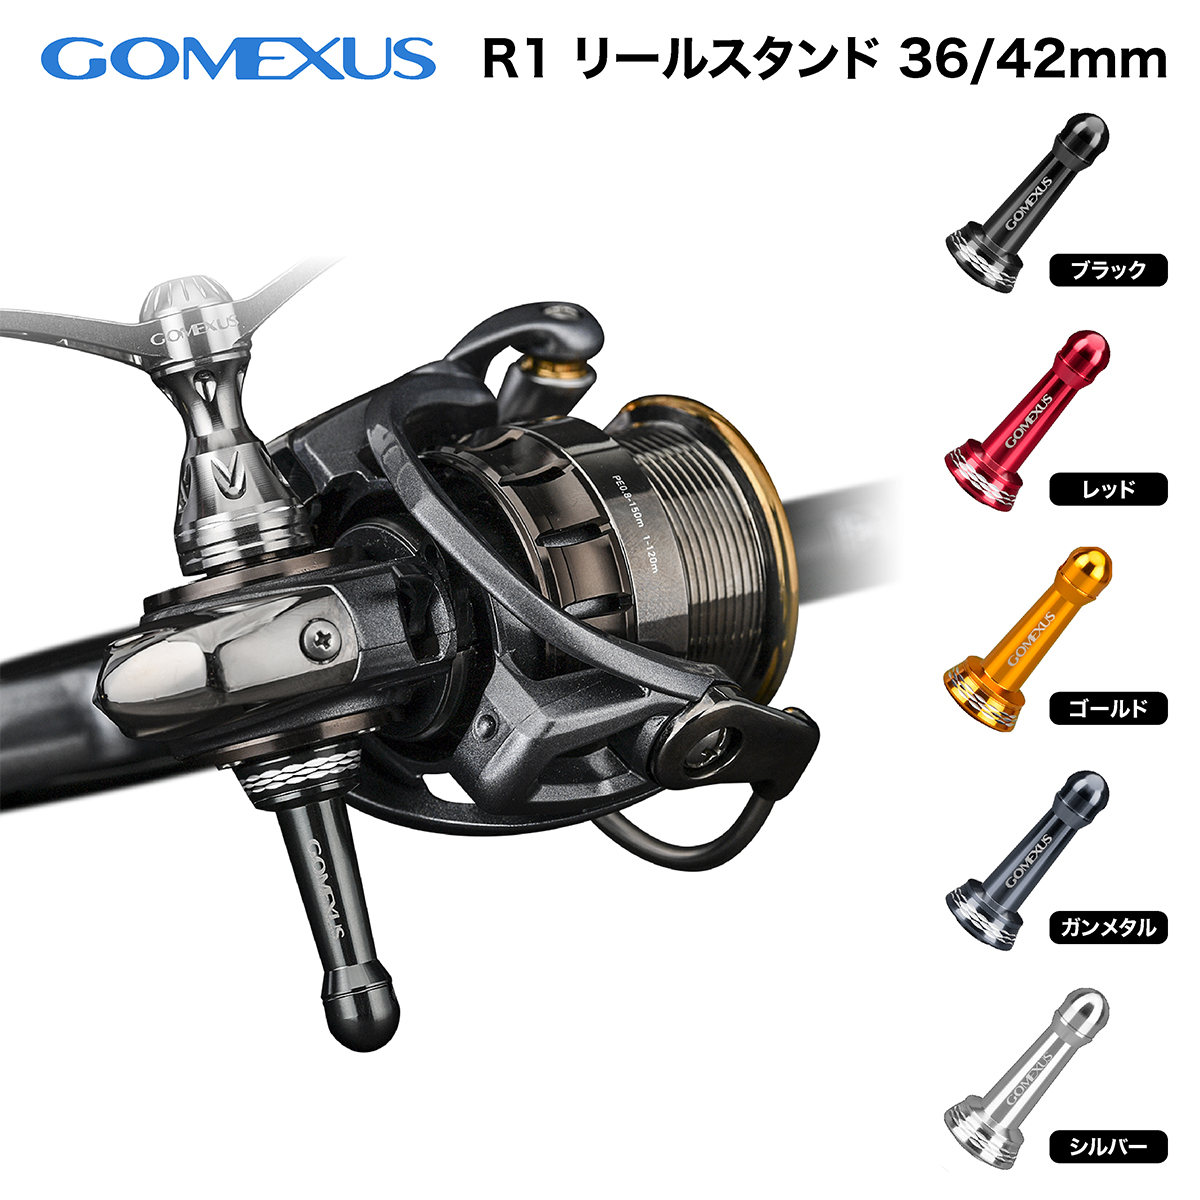 Gomexus ゴメクサス リールスタンド 23 エアリティ専用 ボディーキーパー フック掛け バランサー 調整